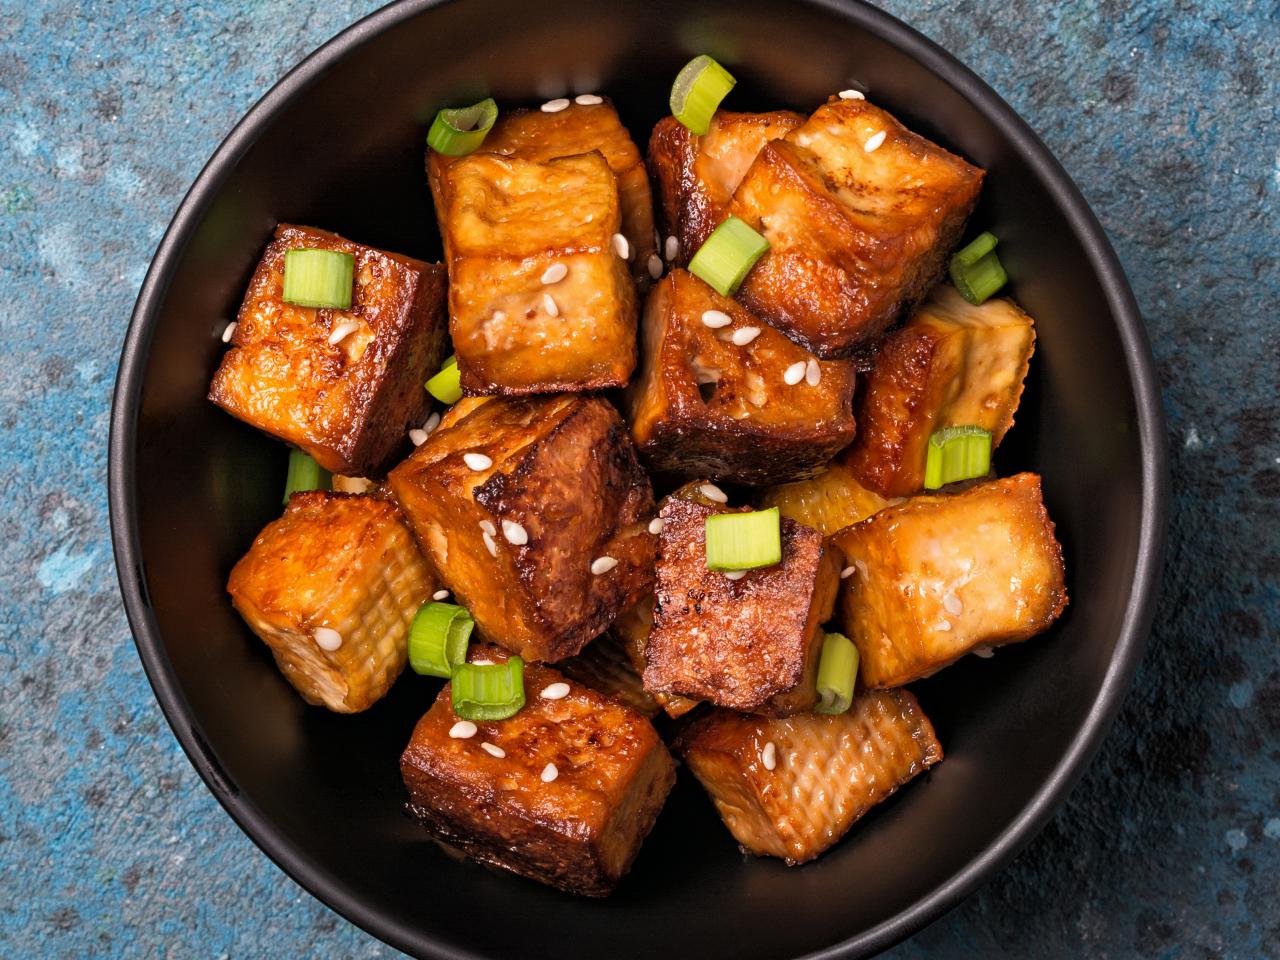 Tout à propos de tofu - Unlock Food